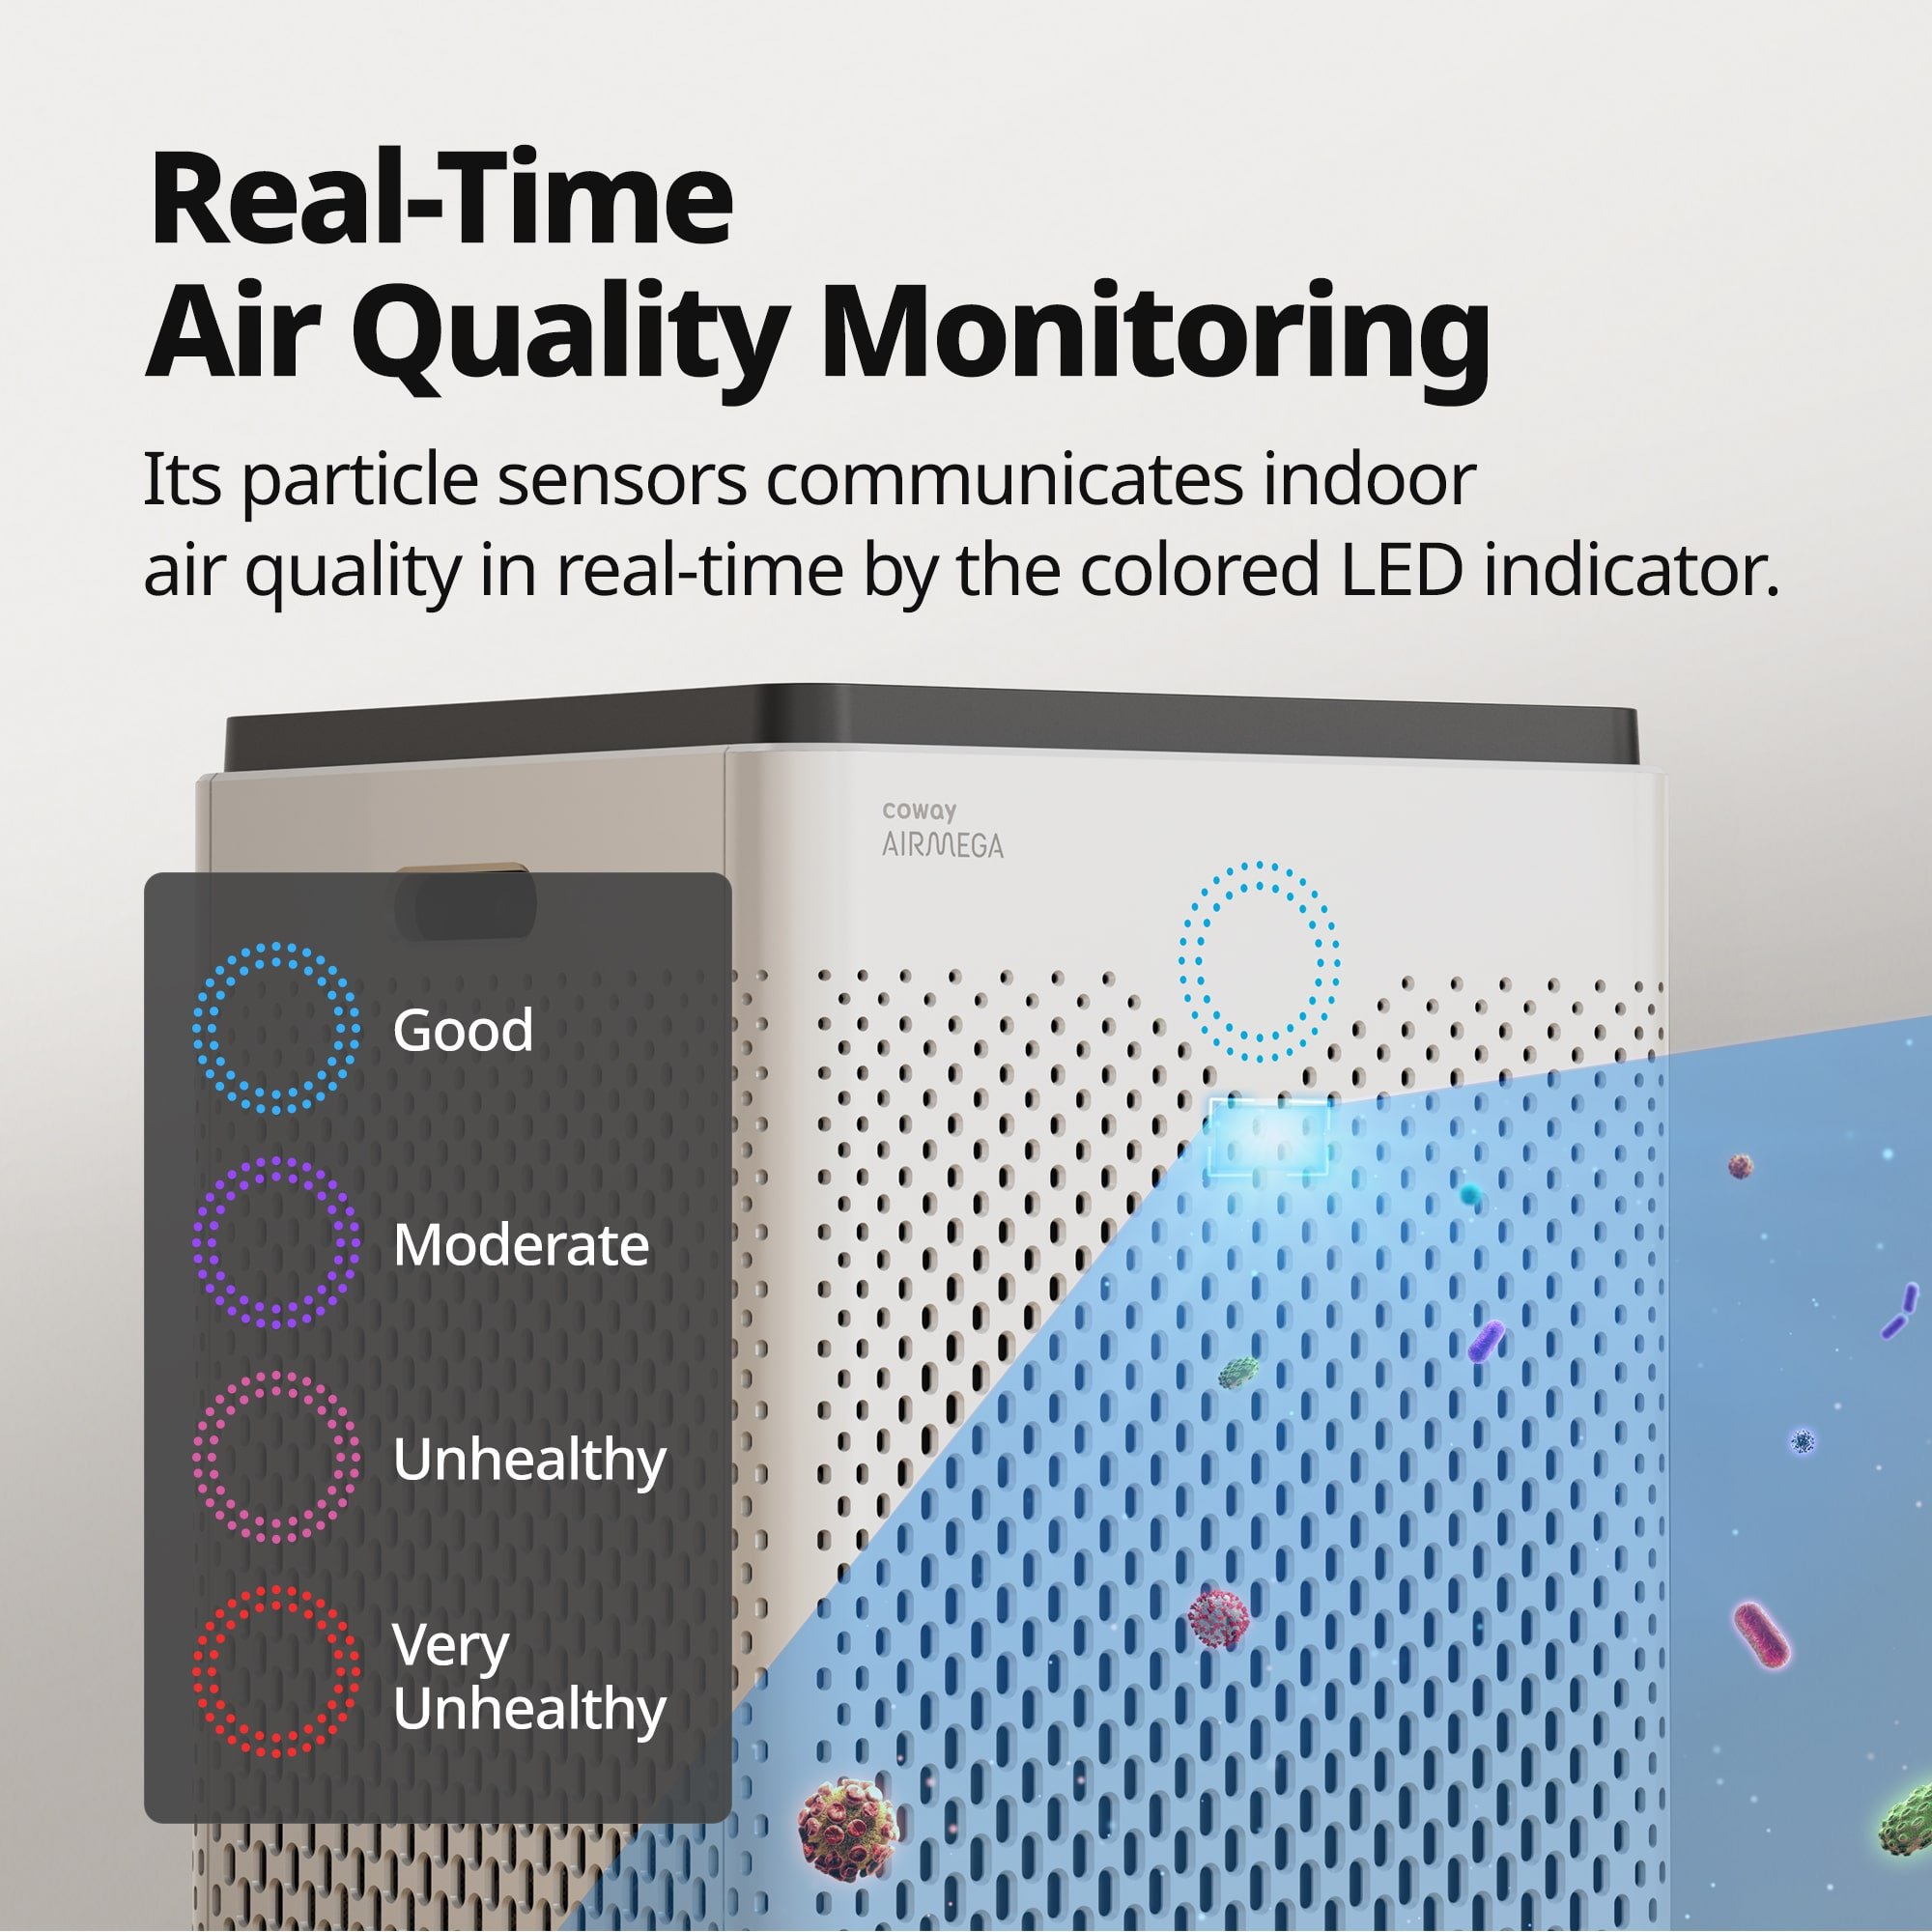 Airmega 300 real-time air quality monitoring